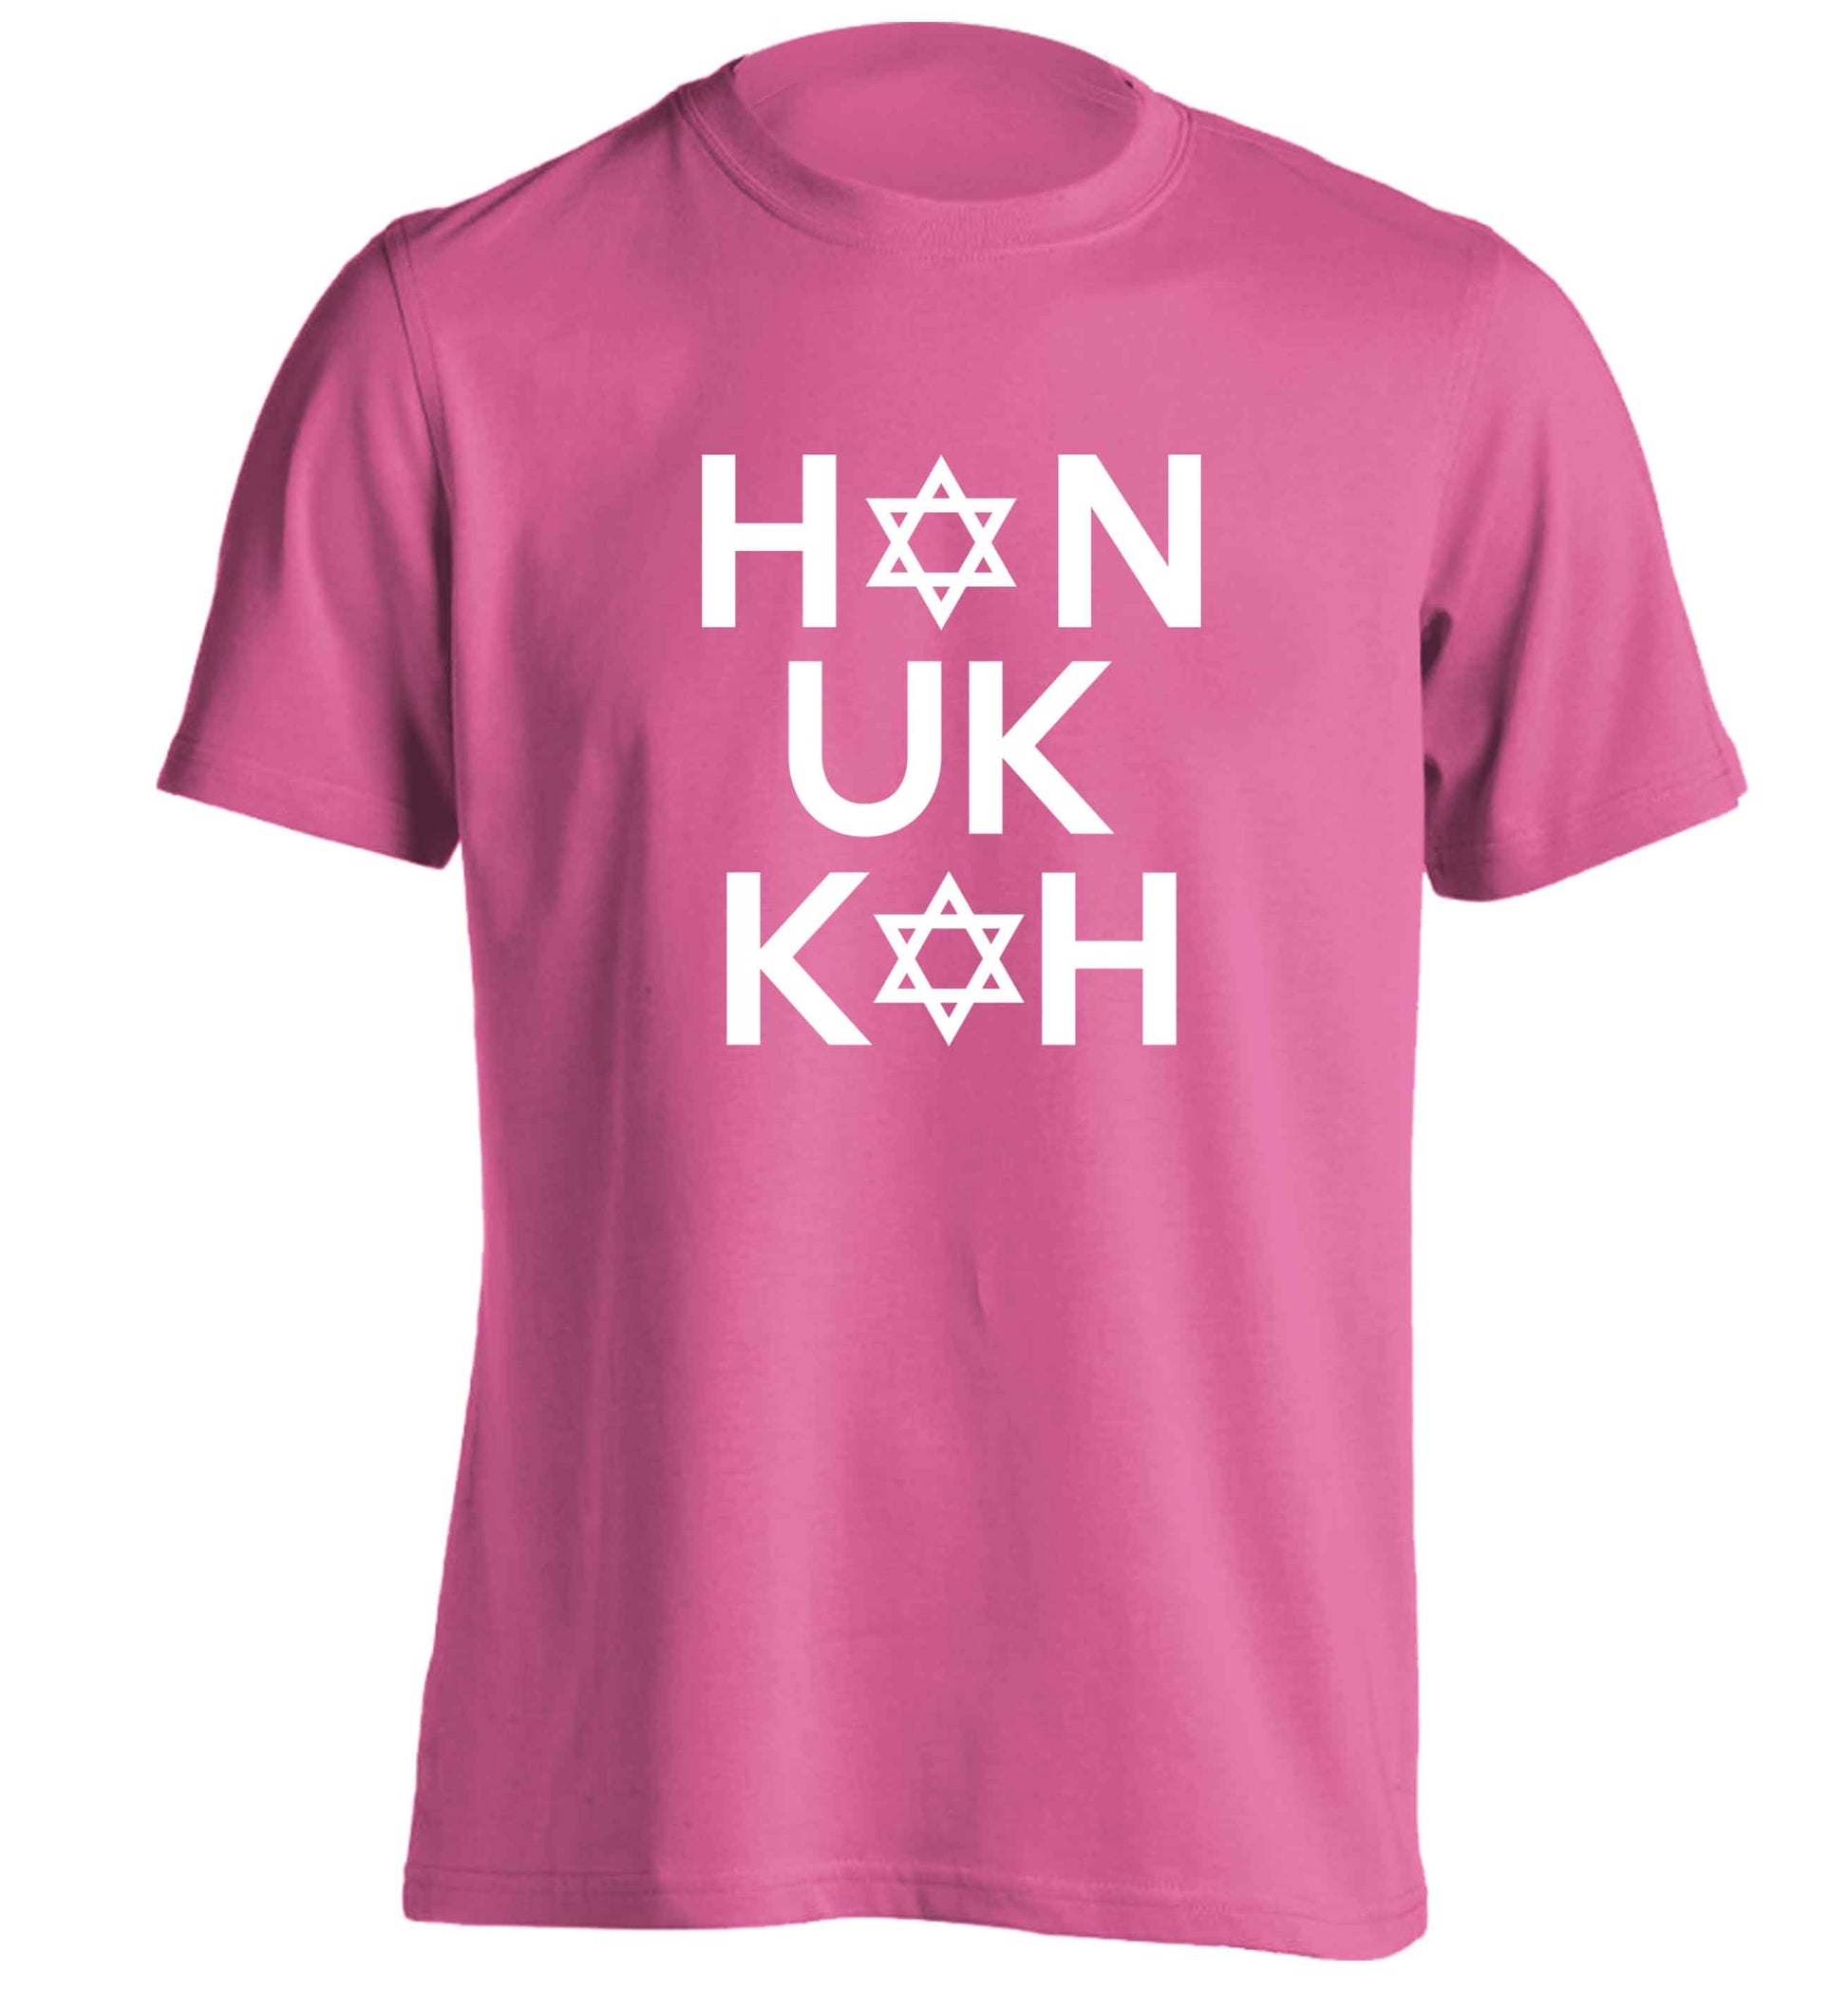 Han uk kah  Hanukkah star of david adults unisex pink Tshirt 2XL